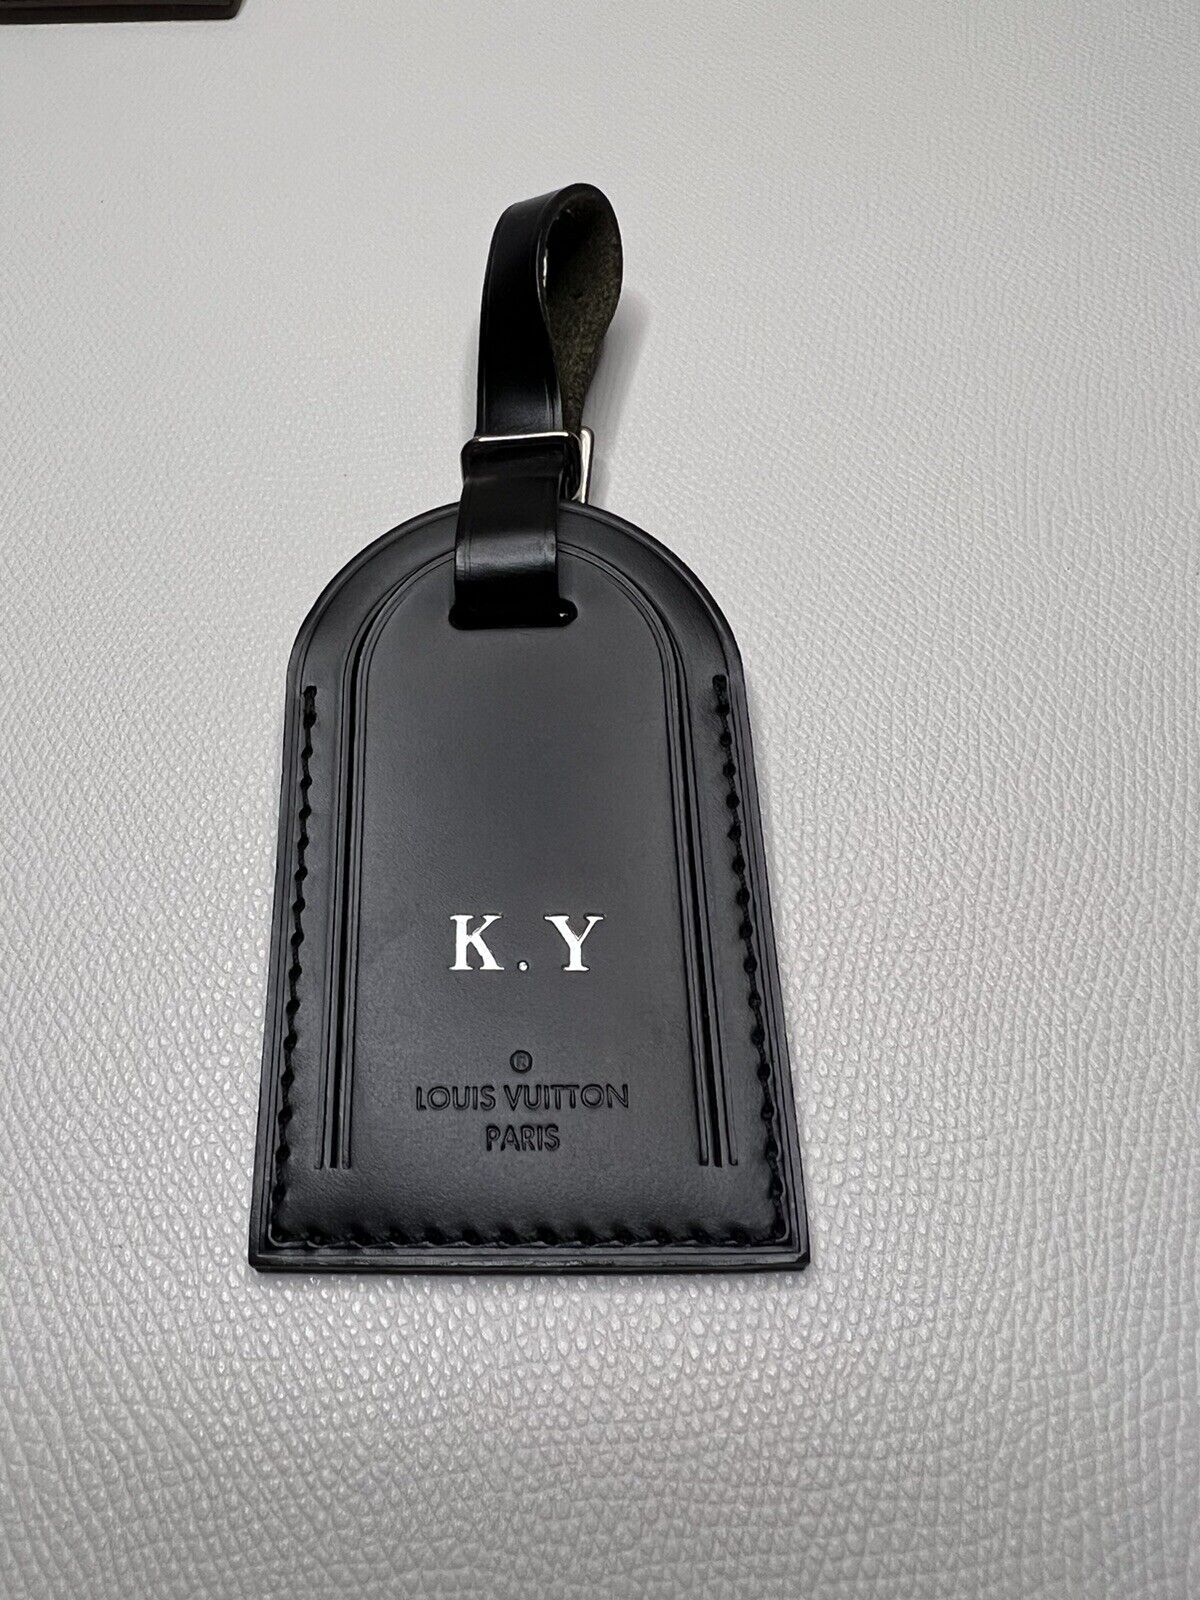 Louis Vuitton Name Tag w/ KY Initials Silvertone Black Calfskin Paris 🇫🇷